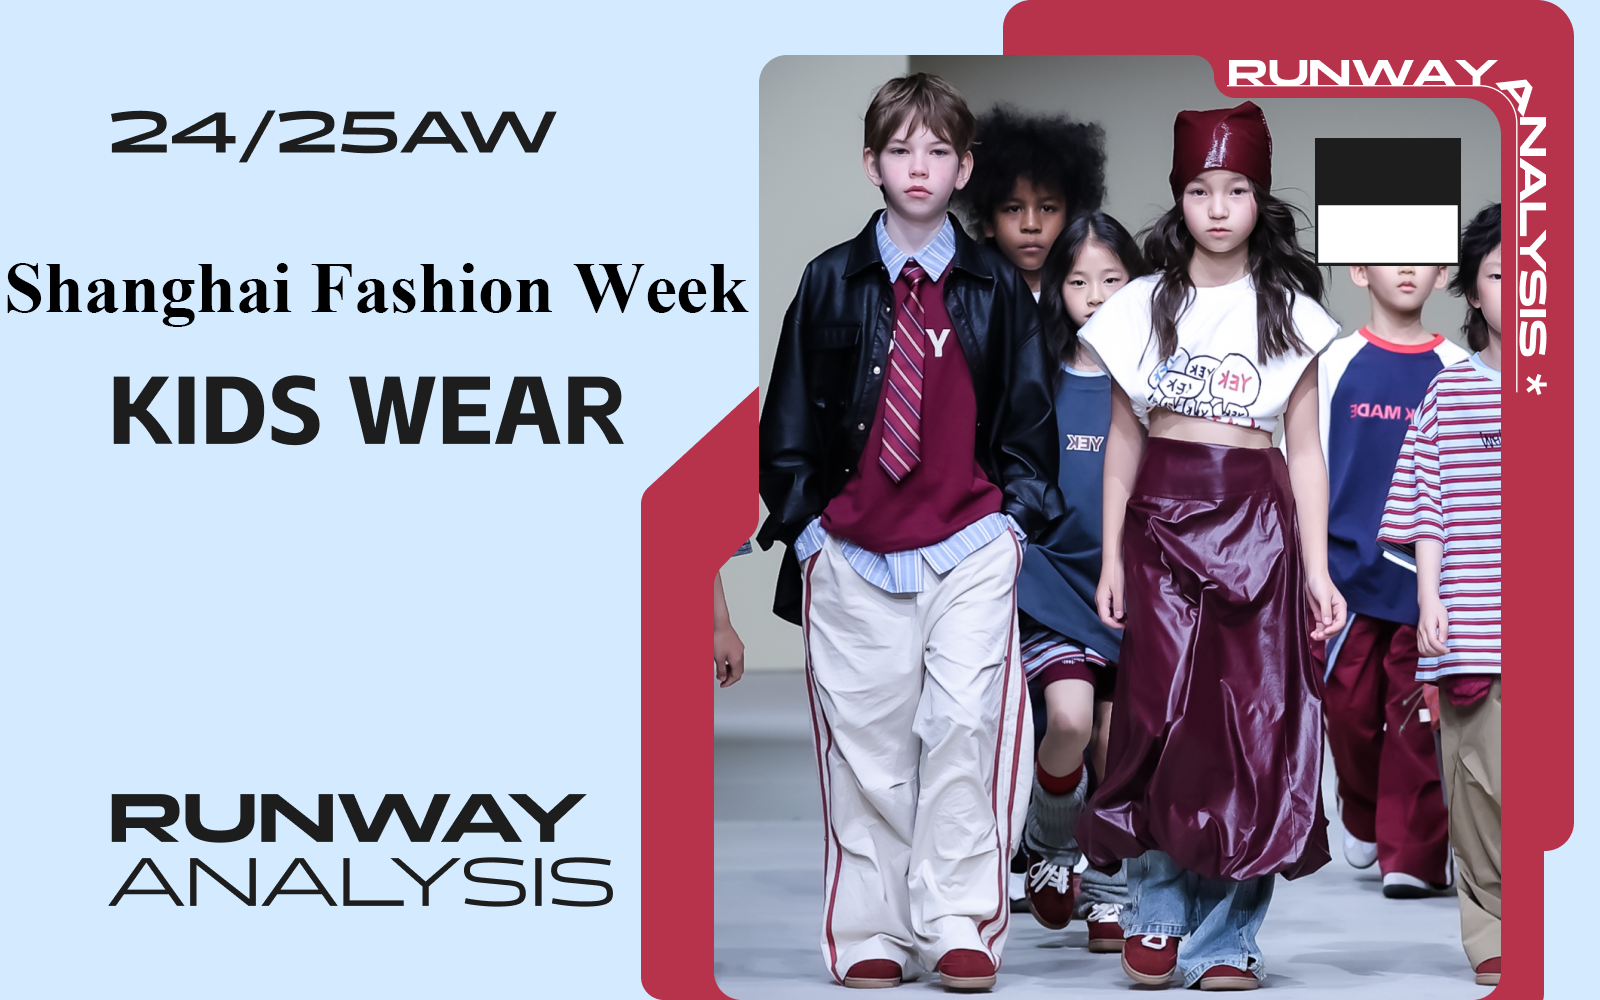 Shanghai Fashion Week KIDS WEAR: Key Brand Recommendations